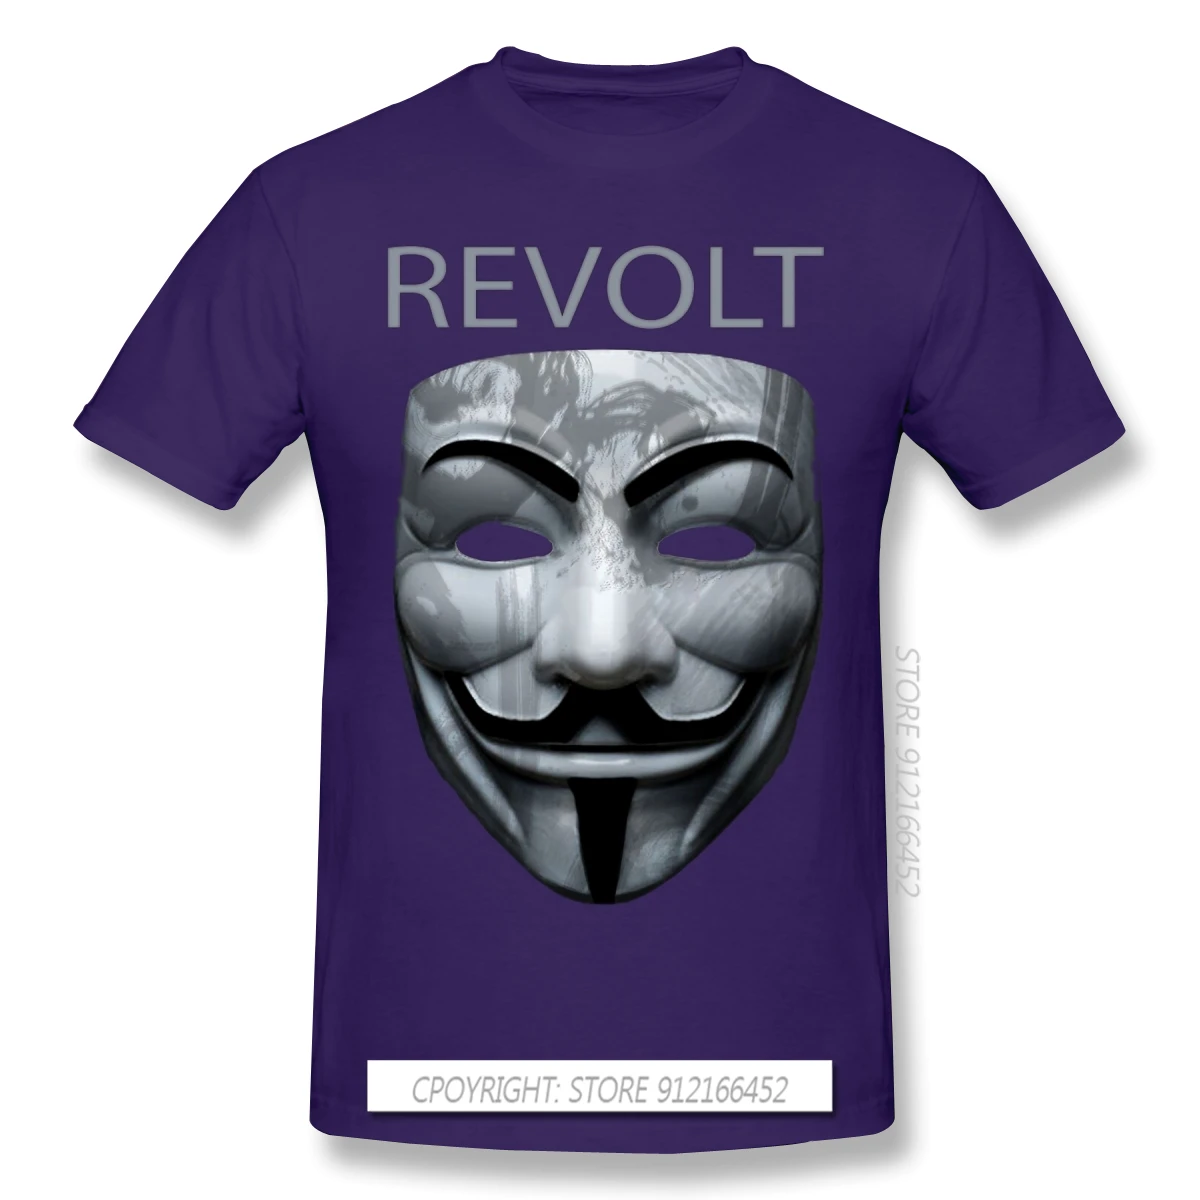 Revolt V Mask T Shirt Anonymous Hacker Organization Video Black Lives Matter Printing Tshirt Summer Large TShirts